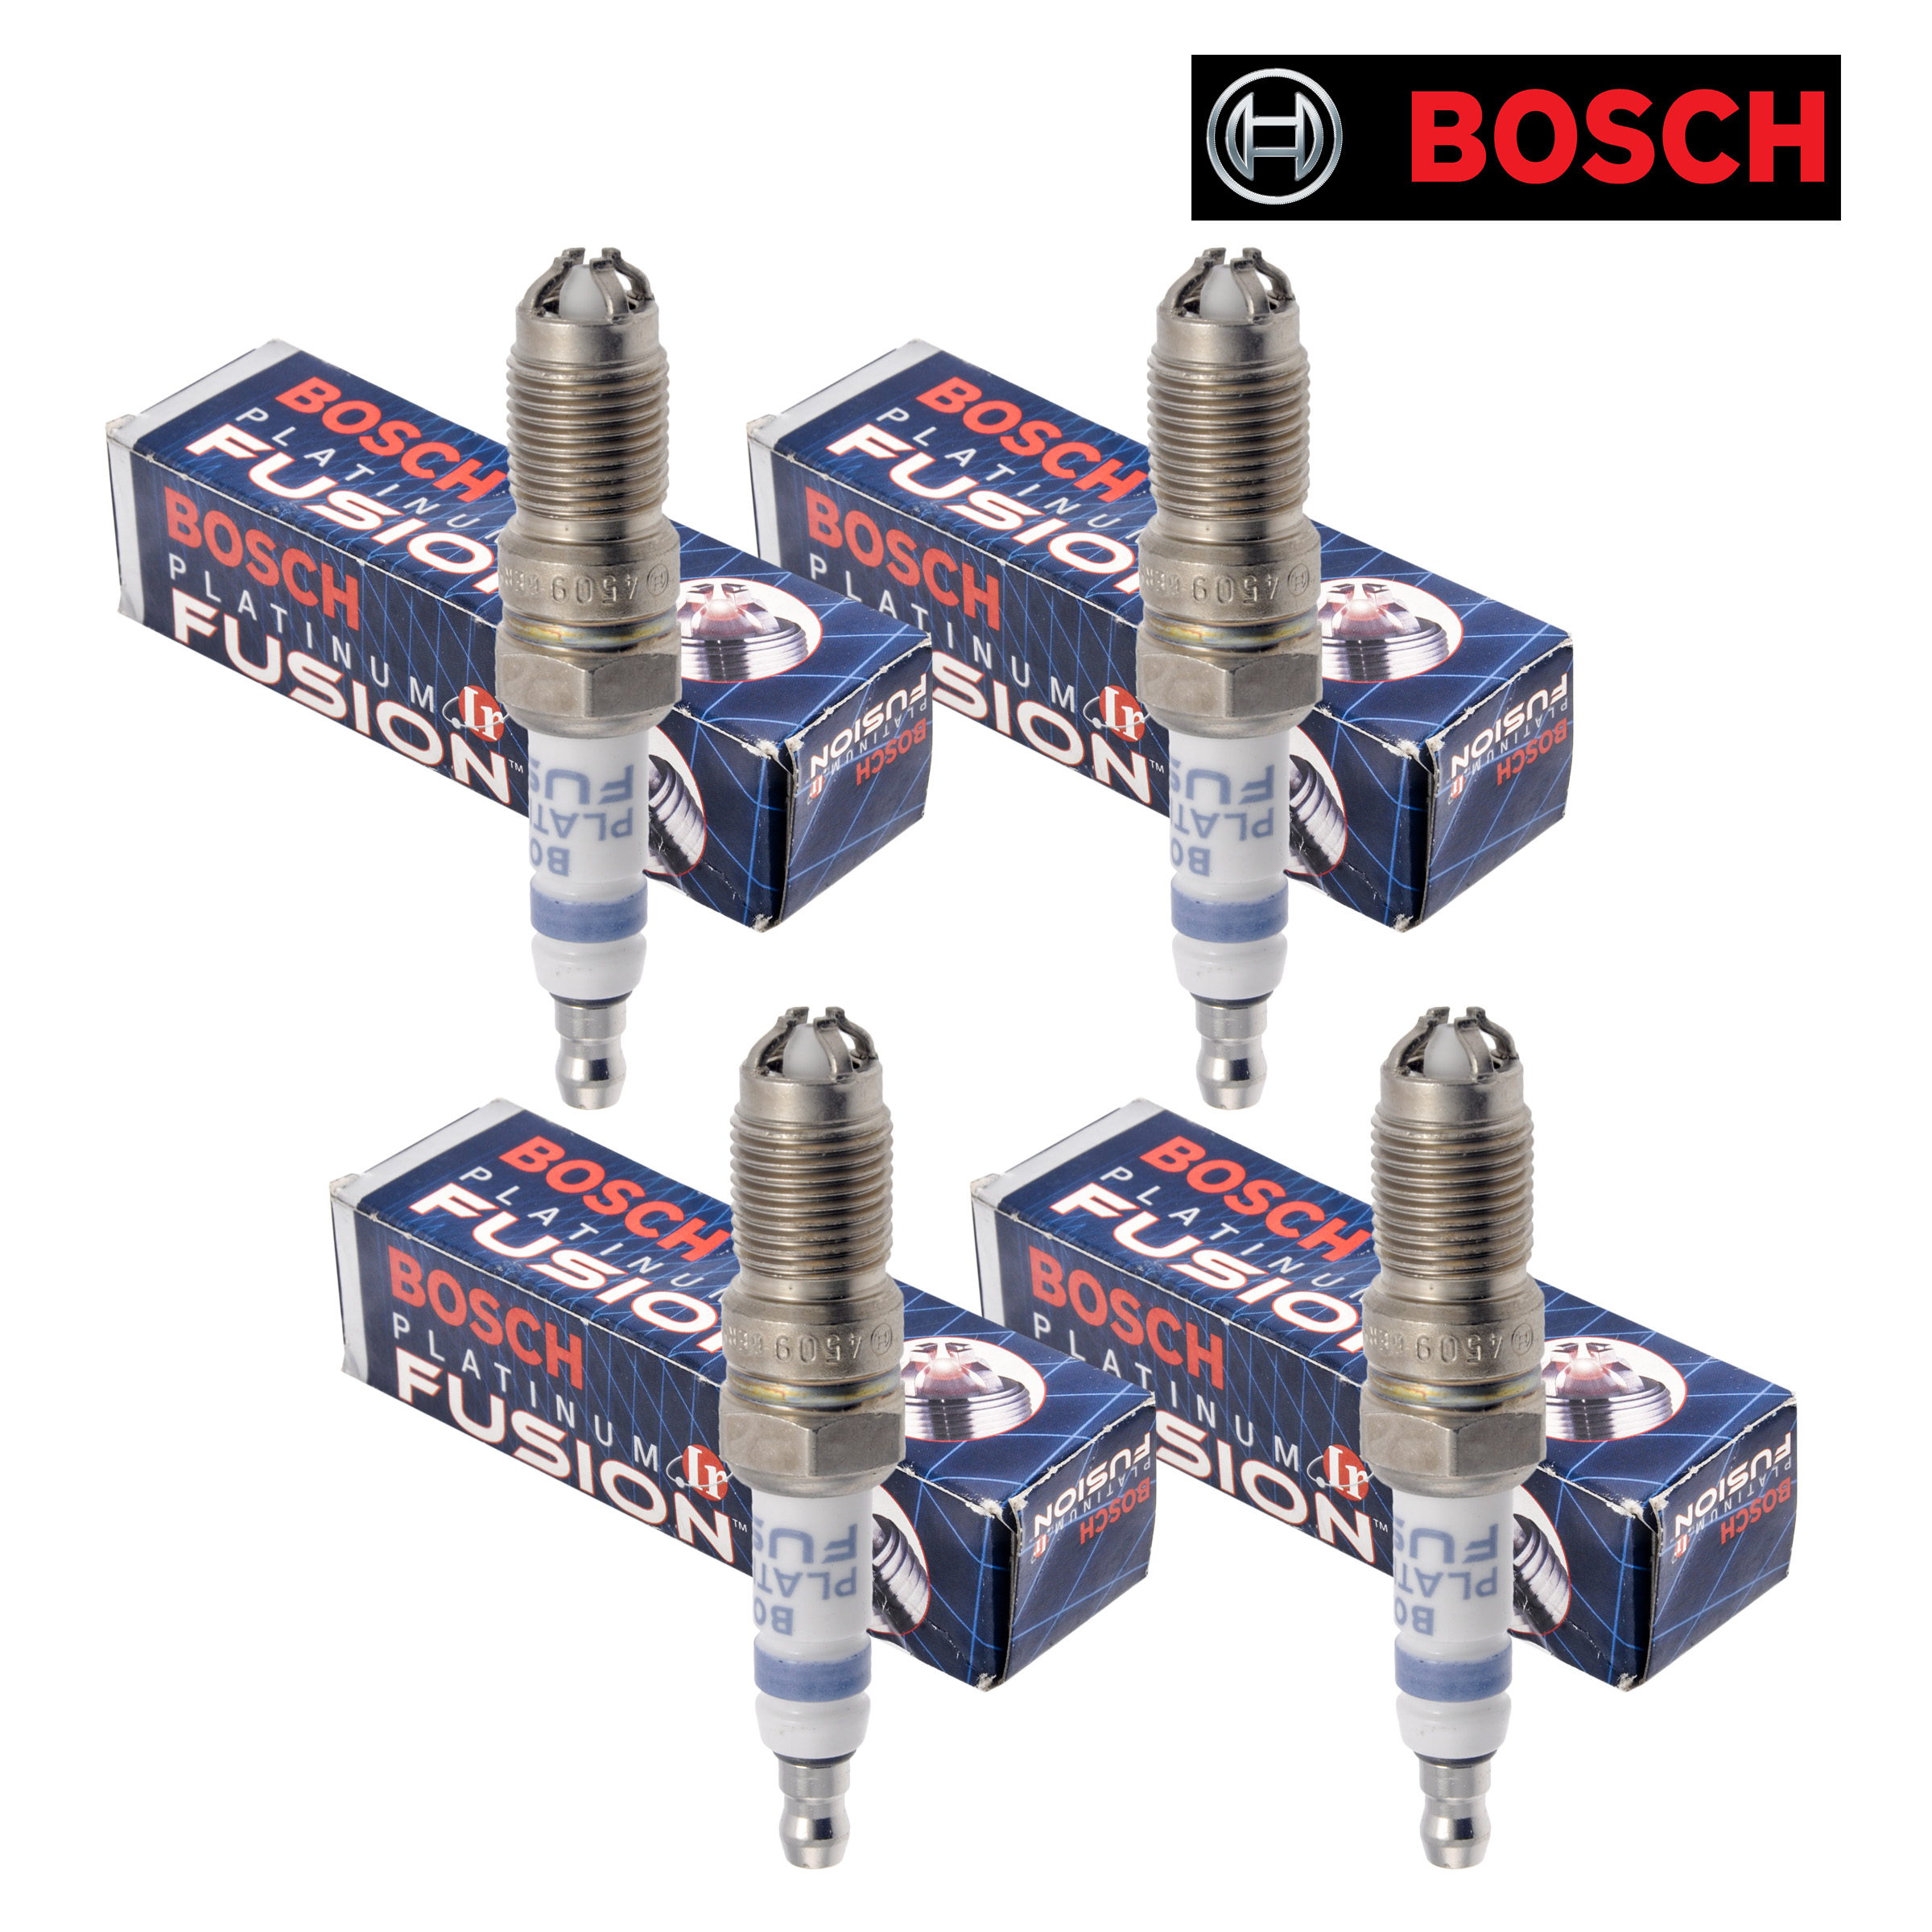 New Set of 4 Bosch Platinum Ir Iridium Fusion Spark Plugs 4509 Made in Germany